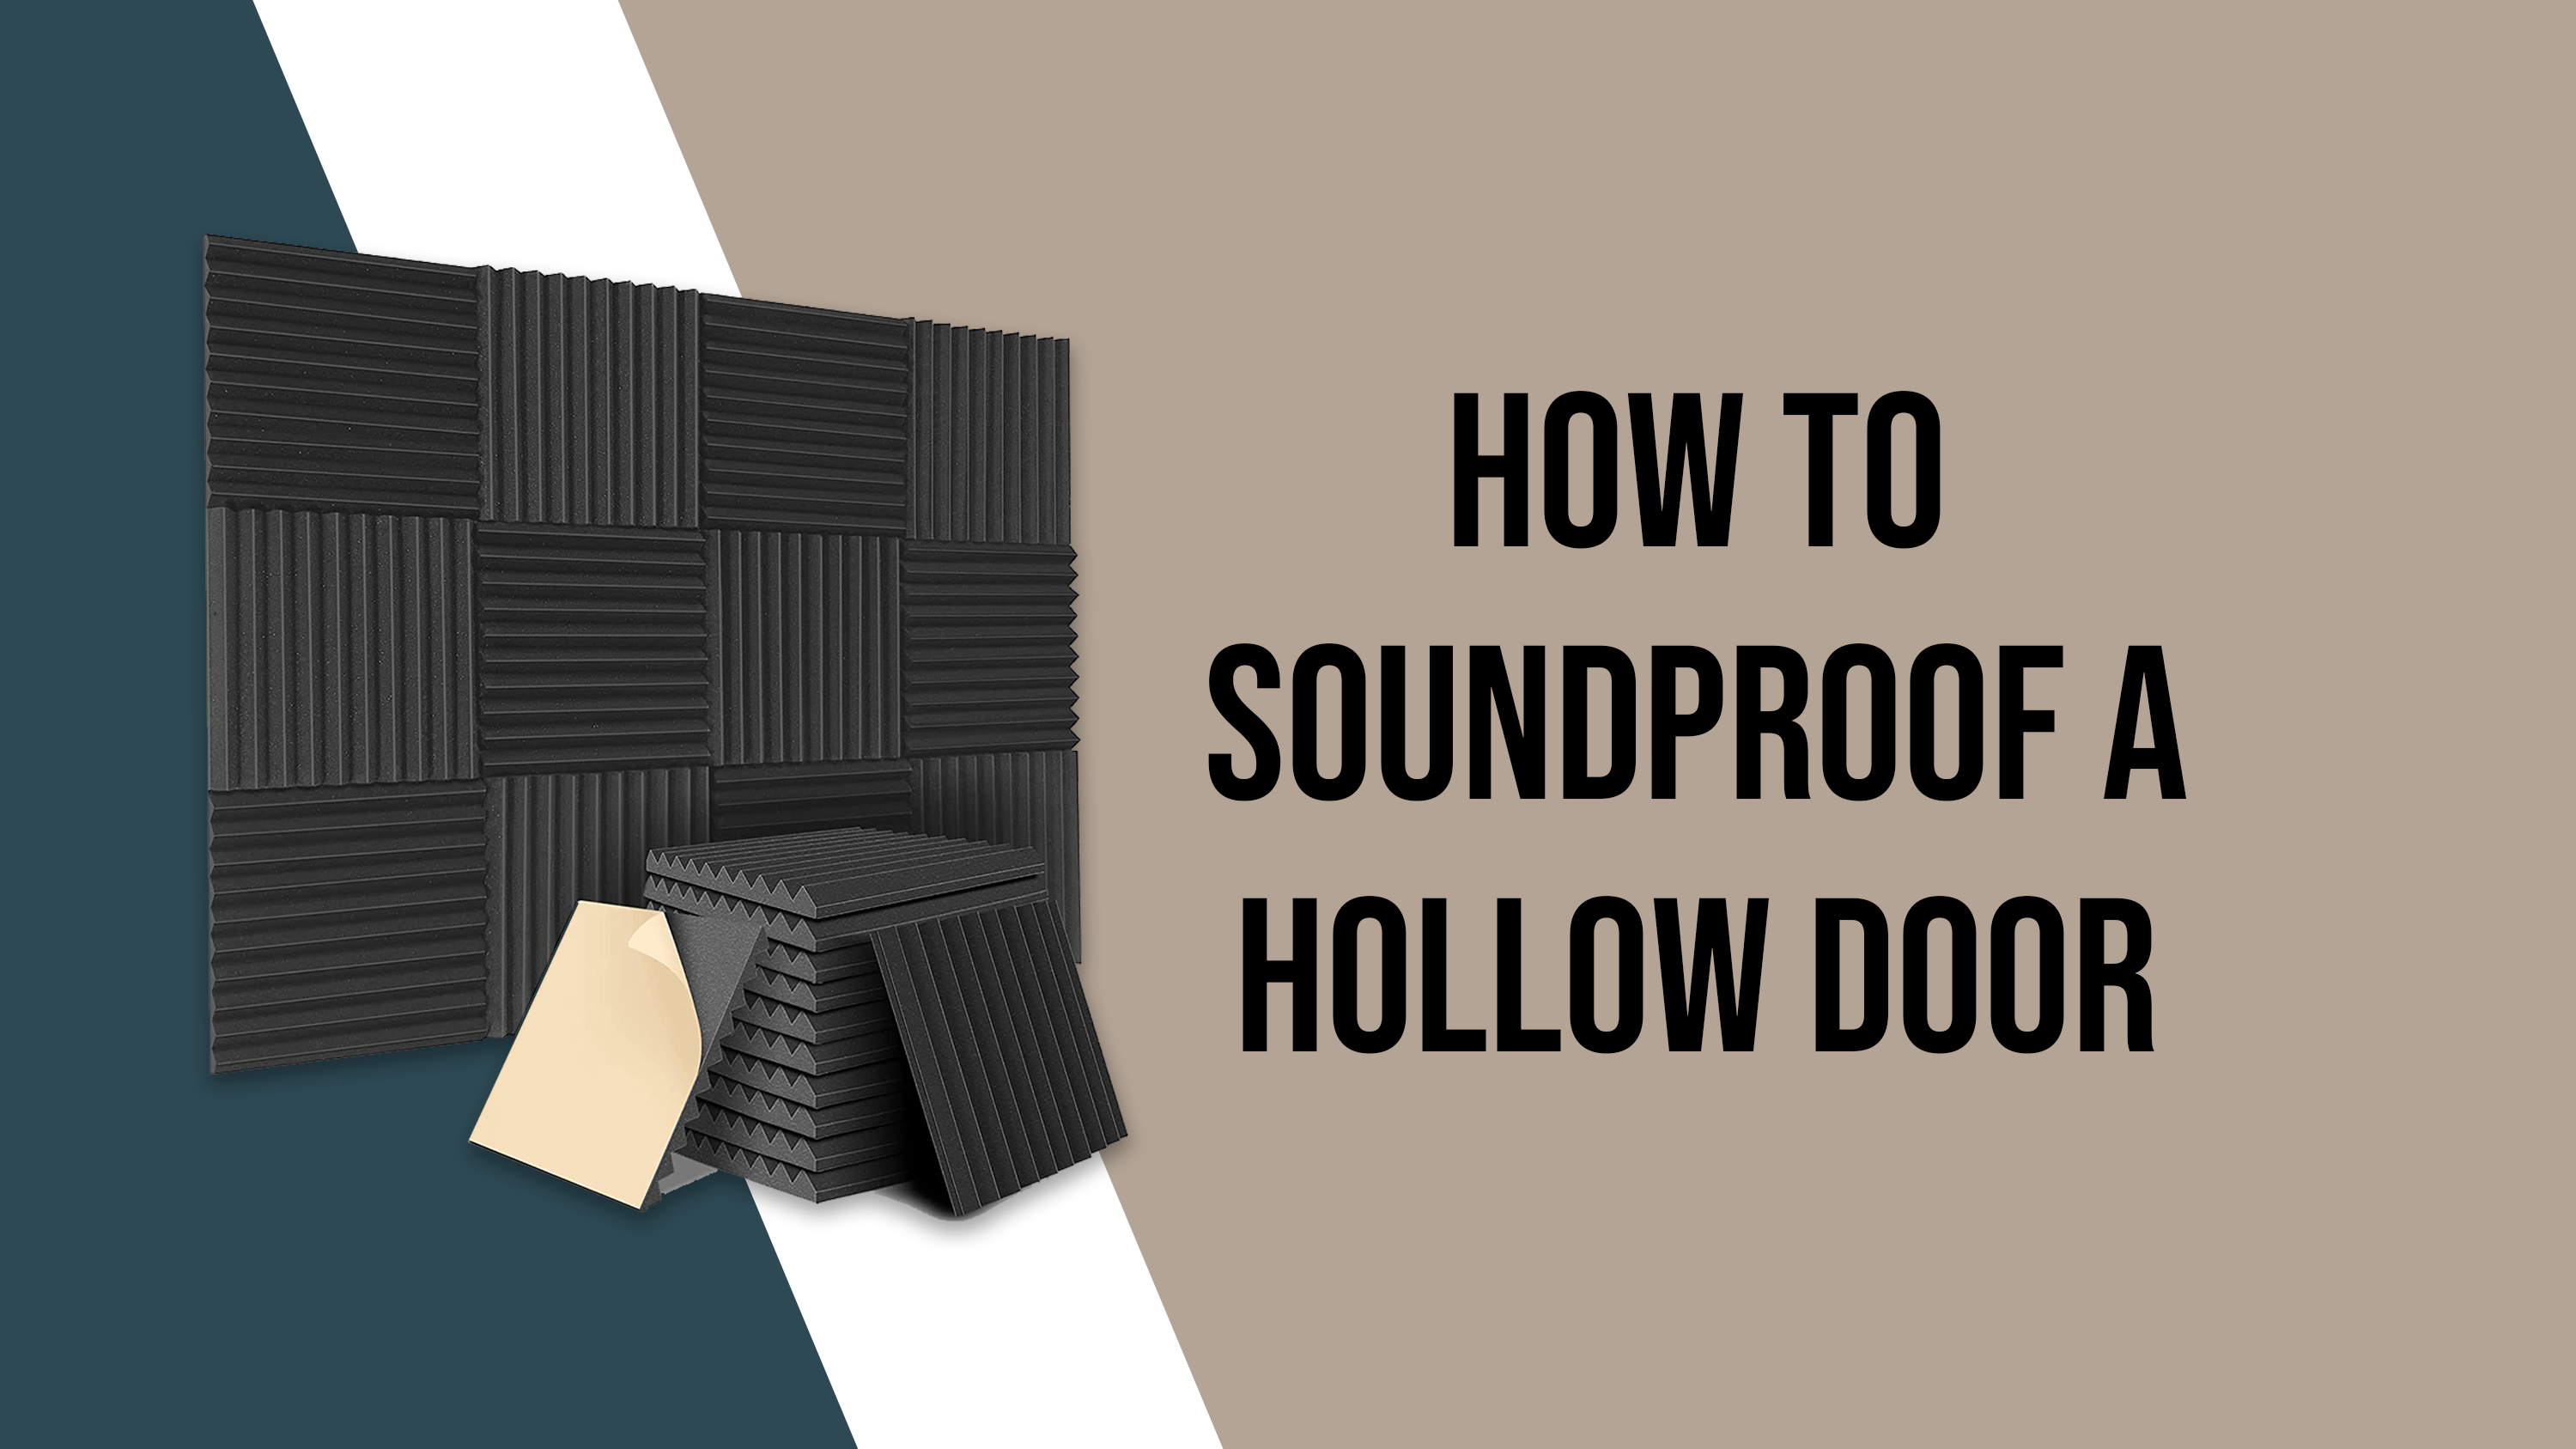 How to soundproof a hollow door